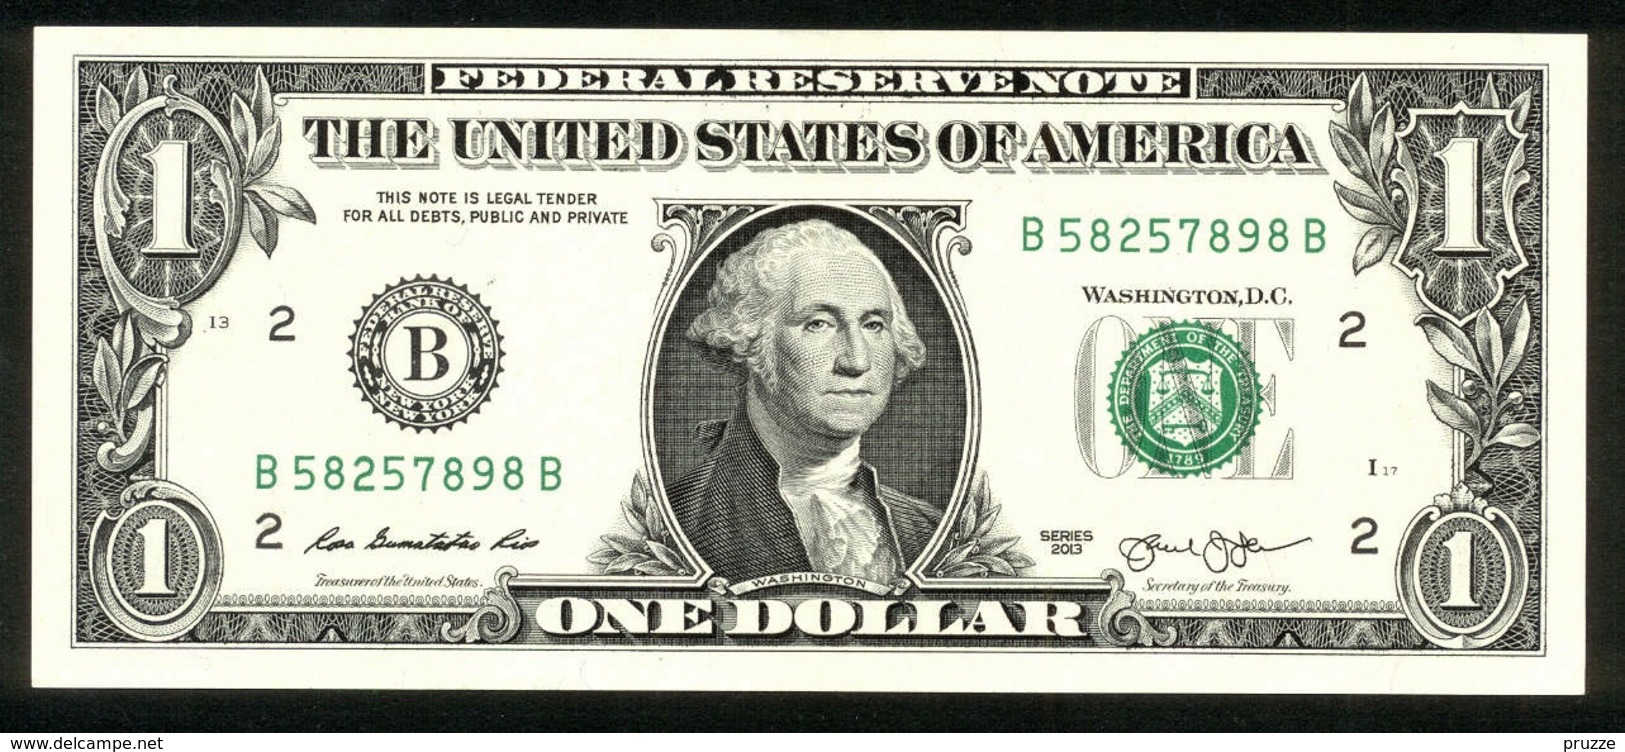 USA 2013, Federal Reserve Note, 1 $, One Dollar, B = New York, UNC, Erhaltung I - Federal Reserve (1928-...)